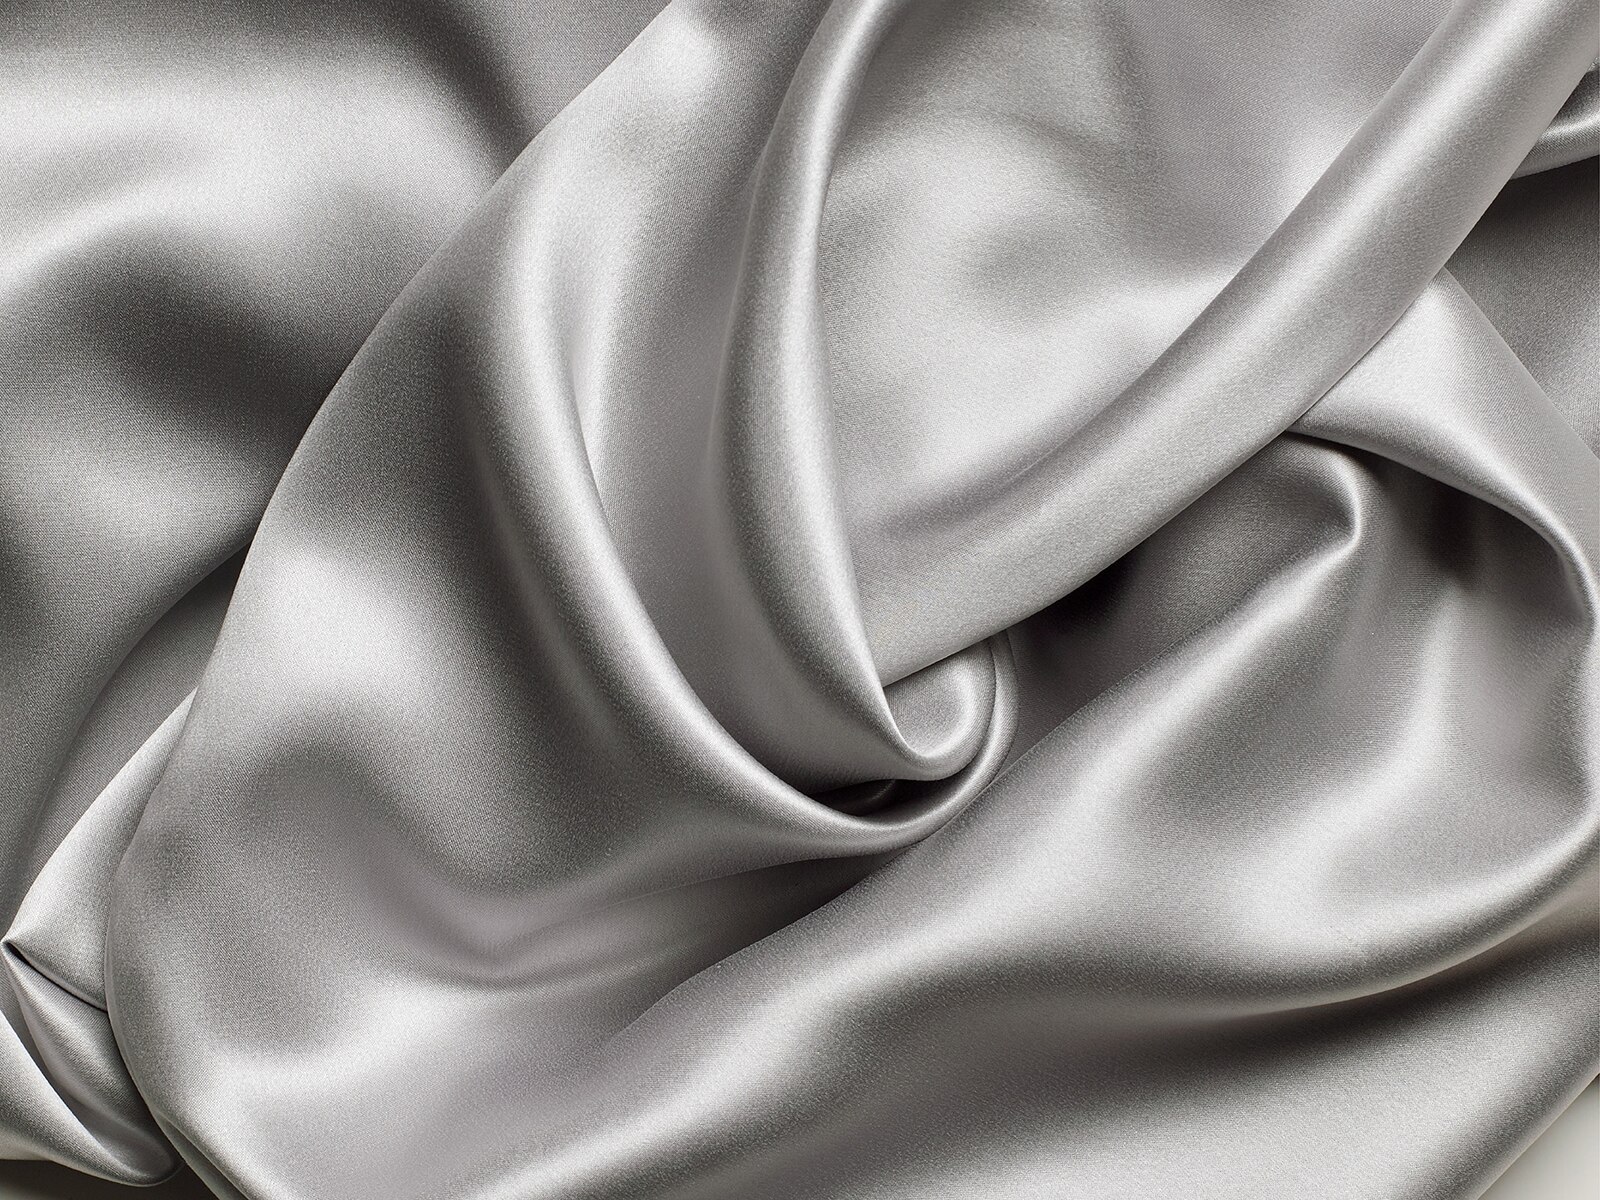 Elements Pure Silk Pillowcase